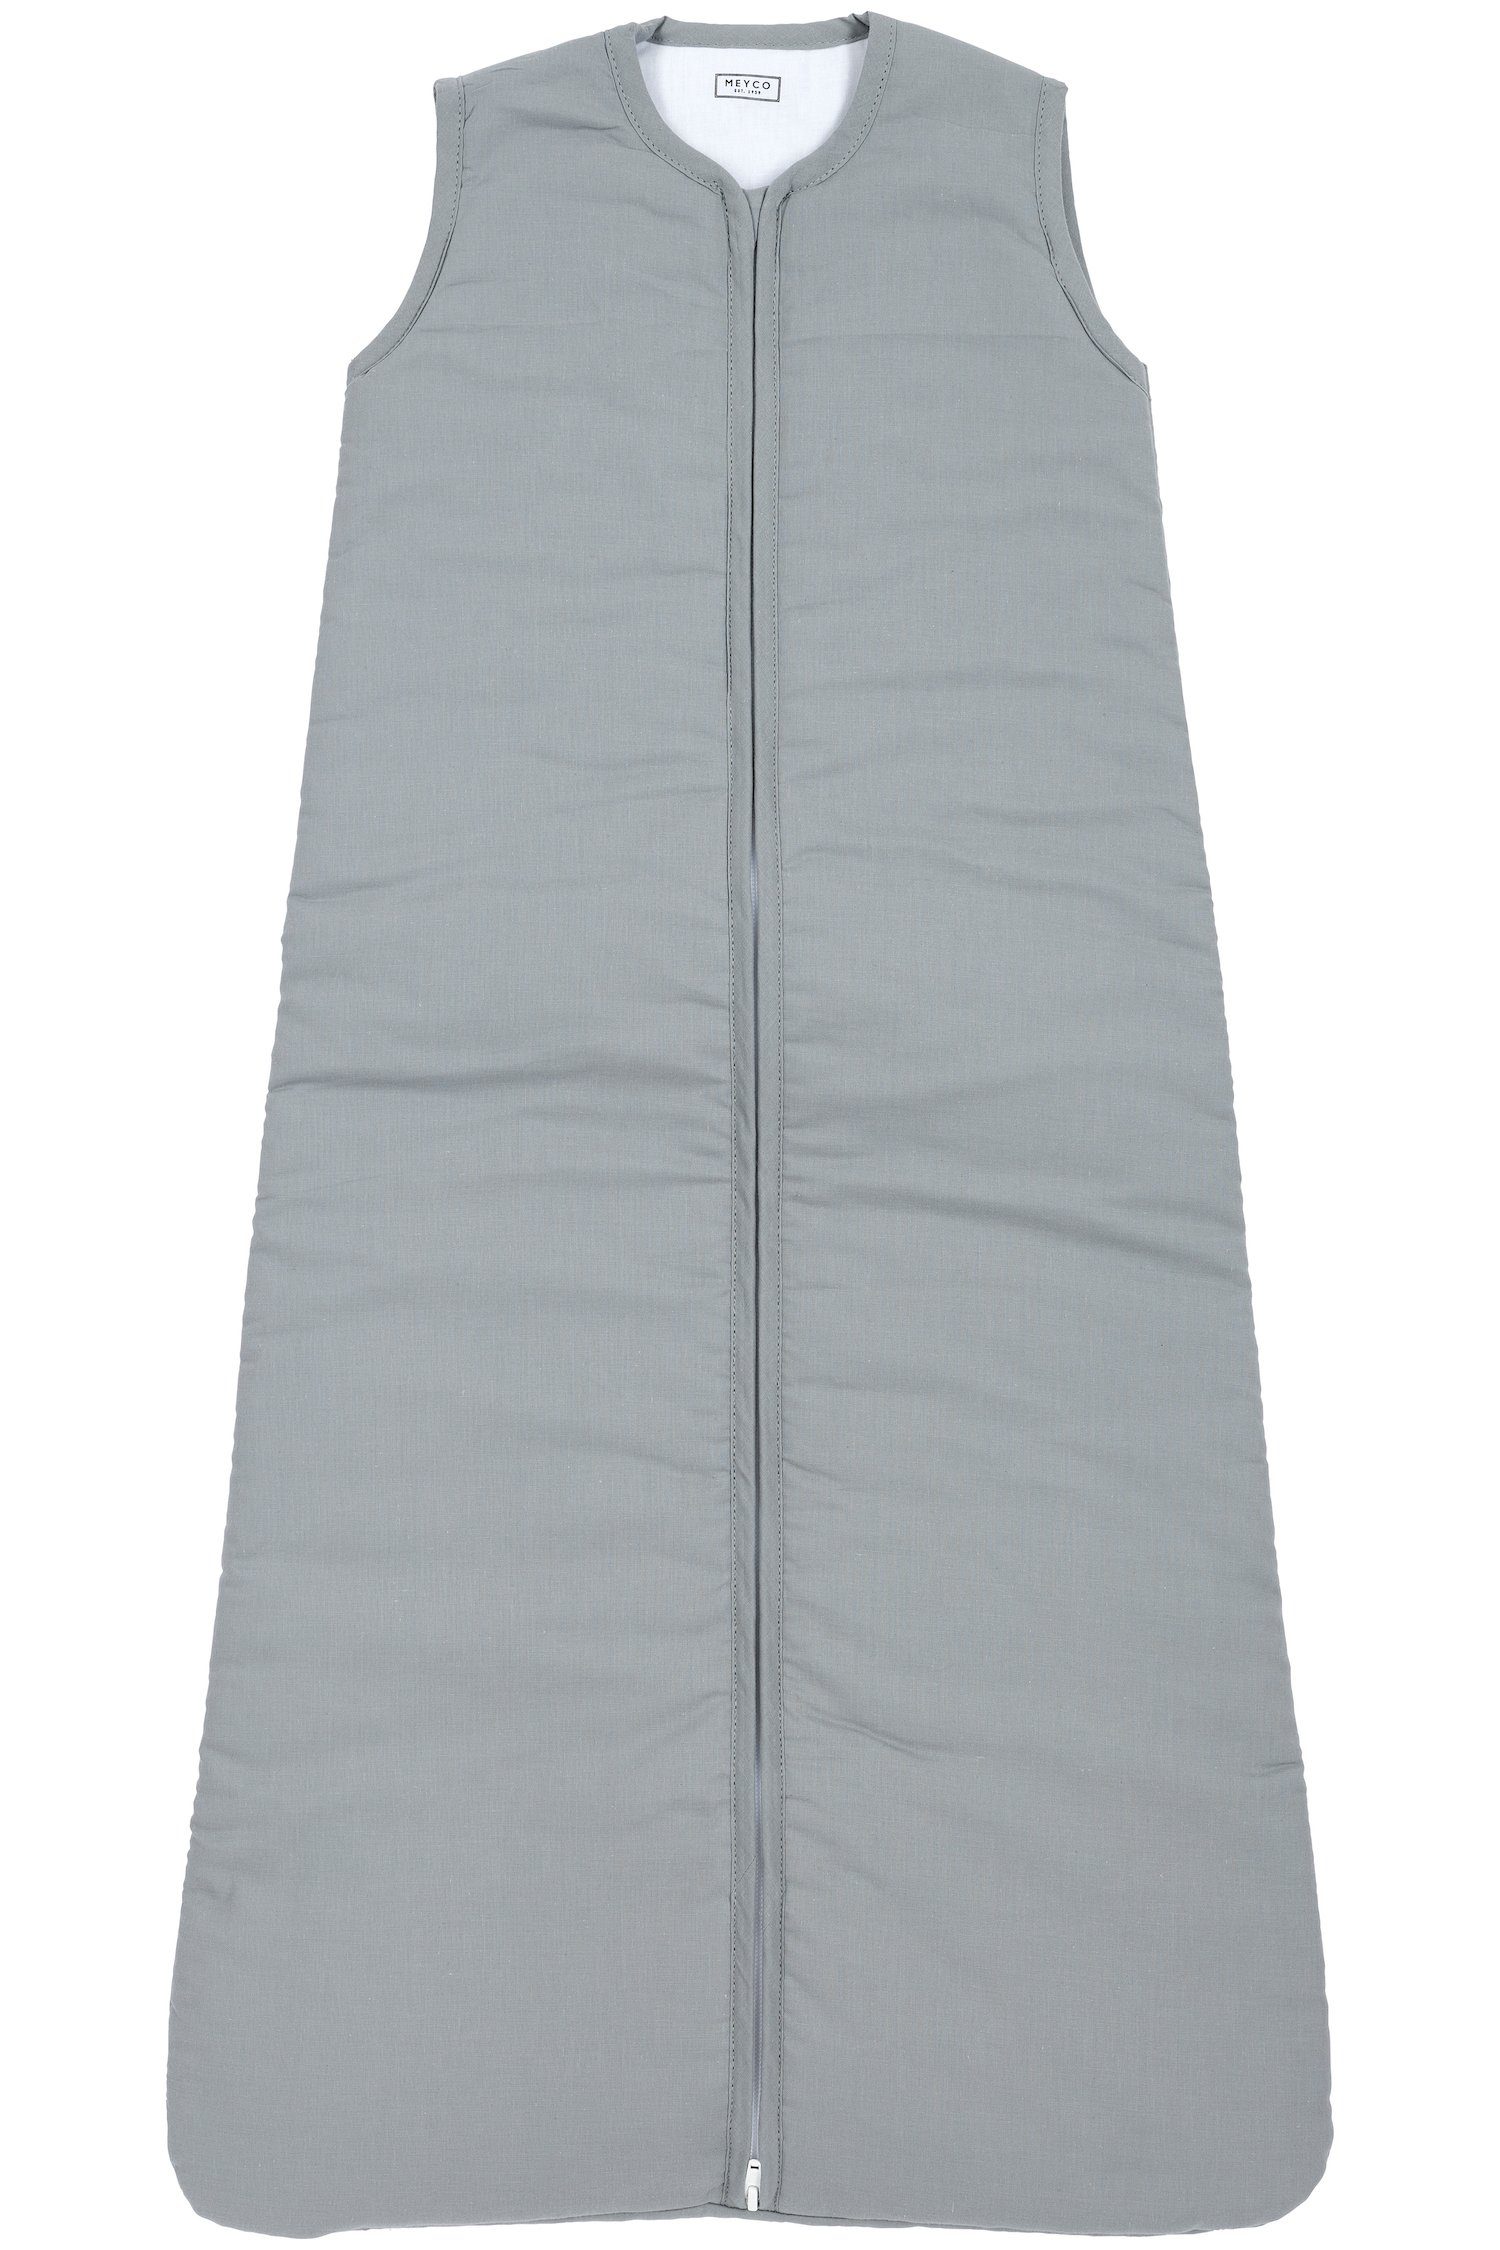 Meyco Baby Babyschlafsack Uni Grey (1 tlg), 70cm